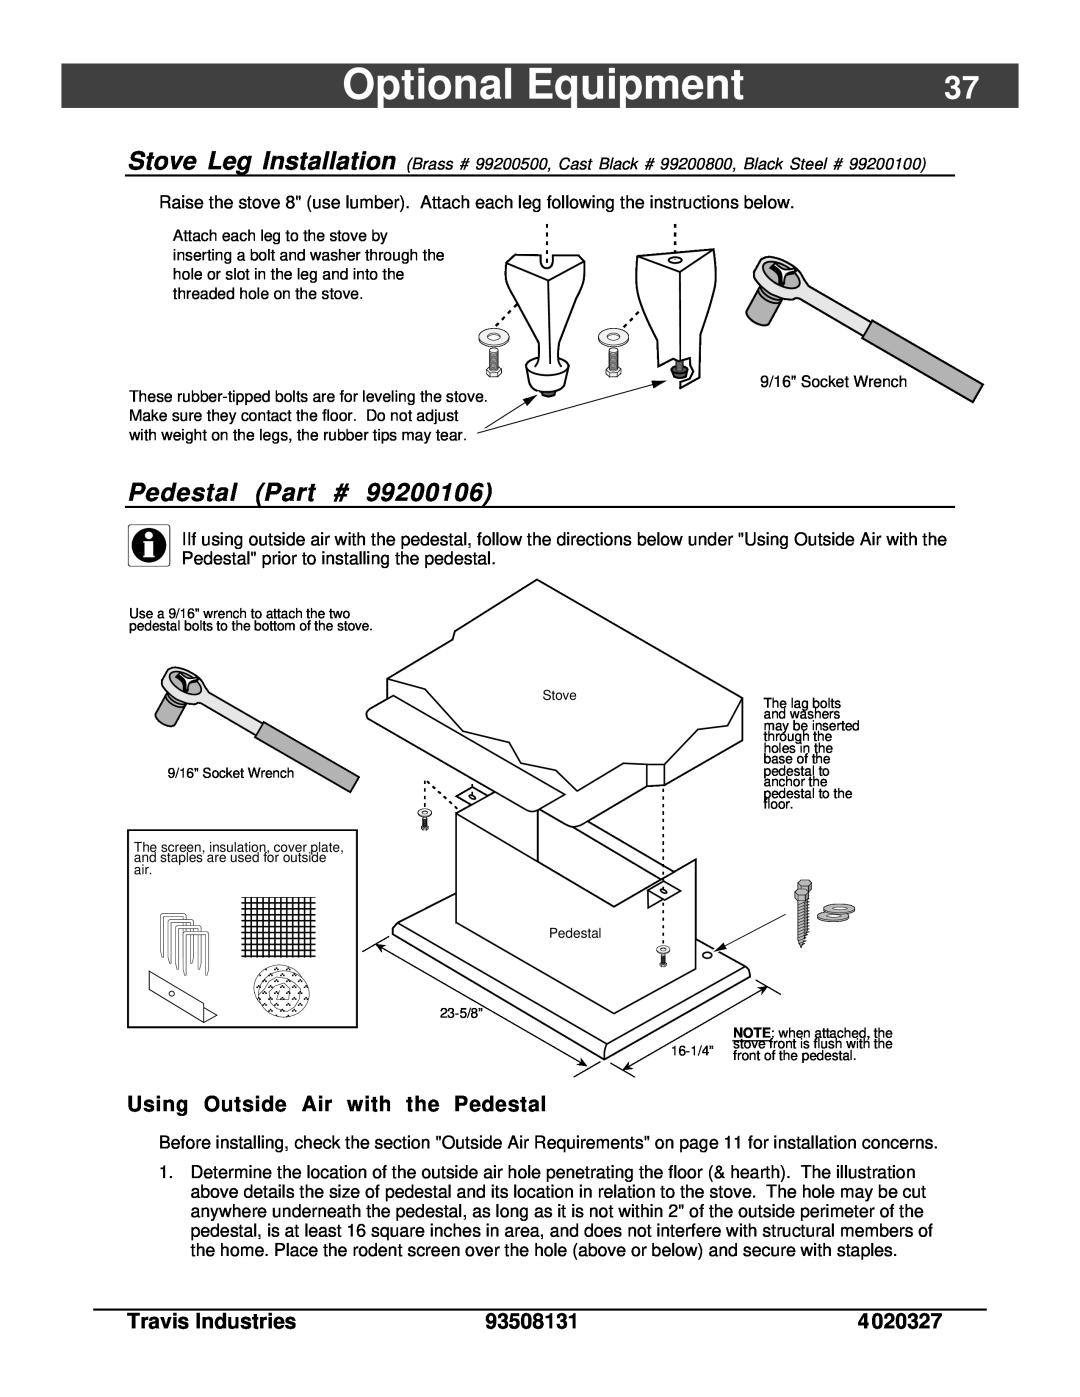 Lopi Answer Wood Stove owner manual Optional Equipment, Pedestal 